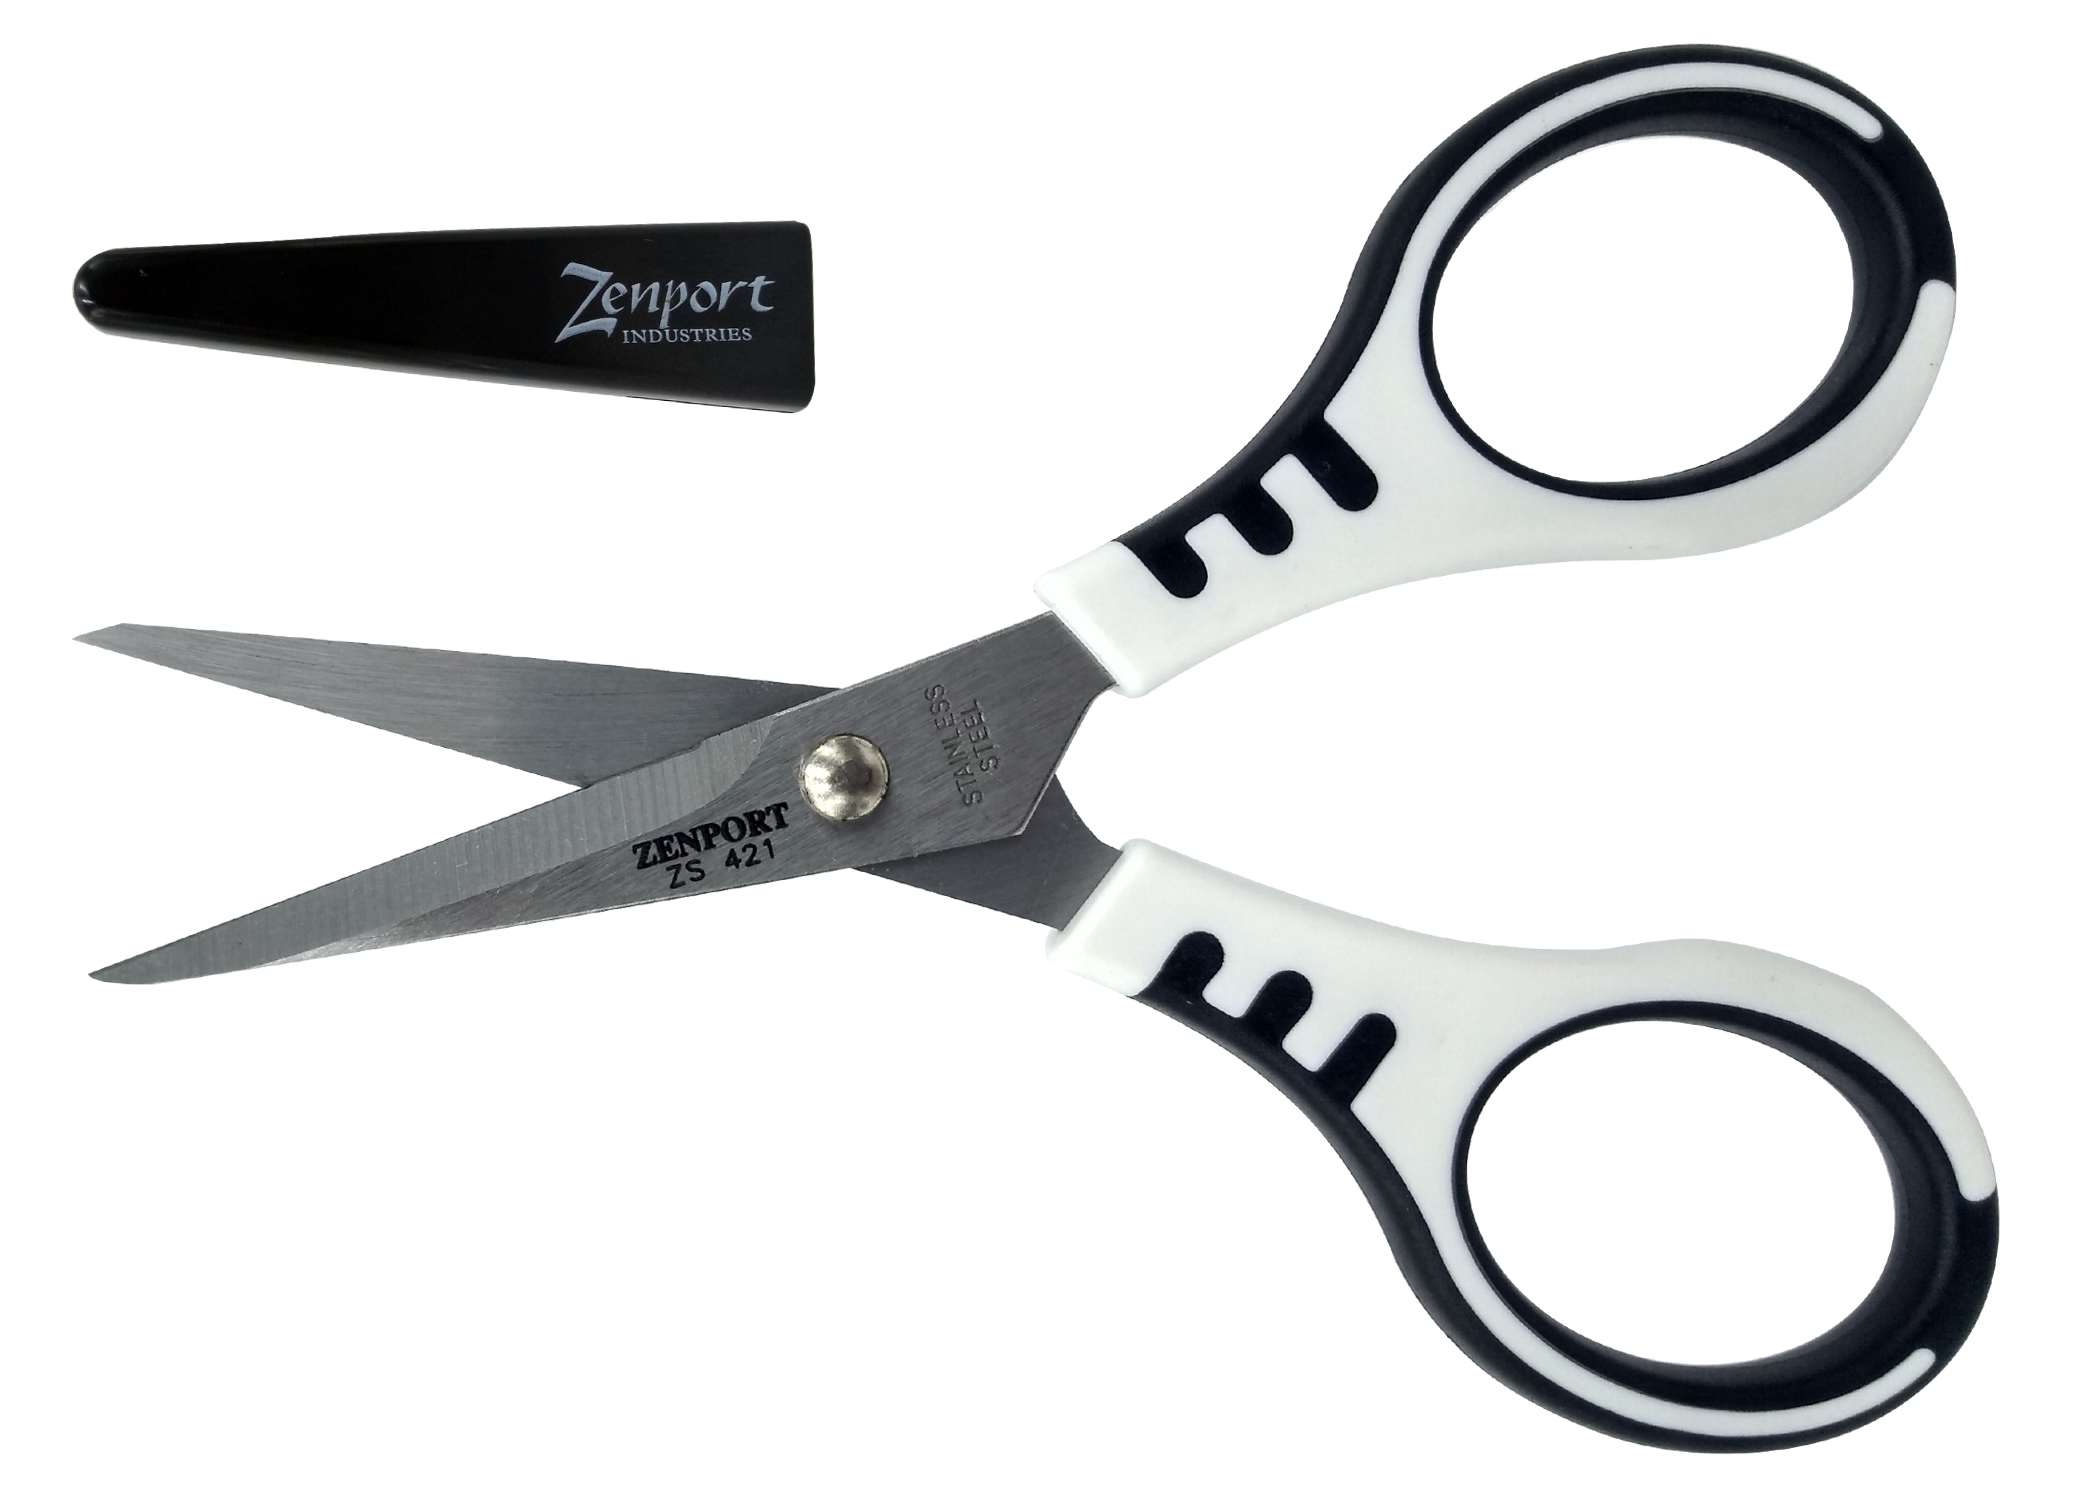 Zenport Scissors ZS421, ZenBee, Trimmer Bee, 5.25-inch long, Stainless, Safety Cap